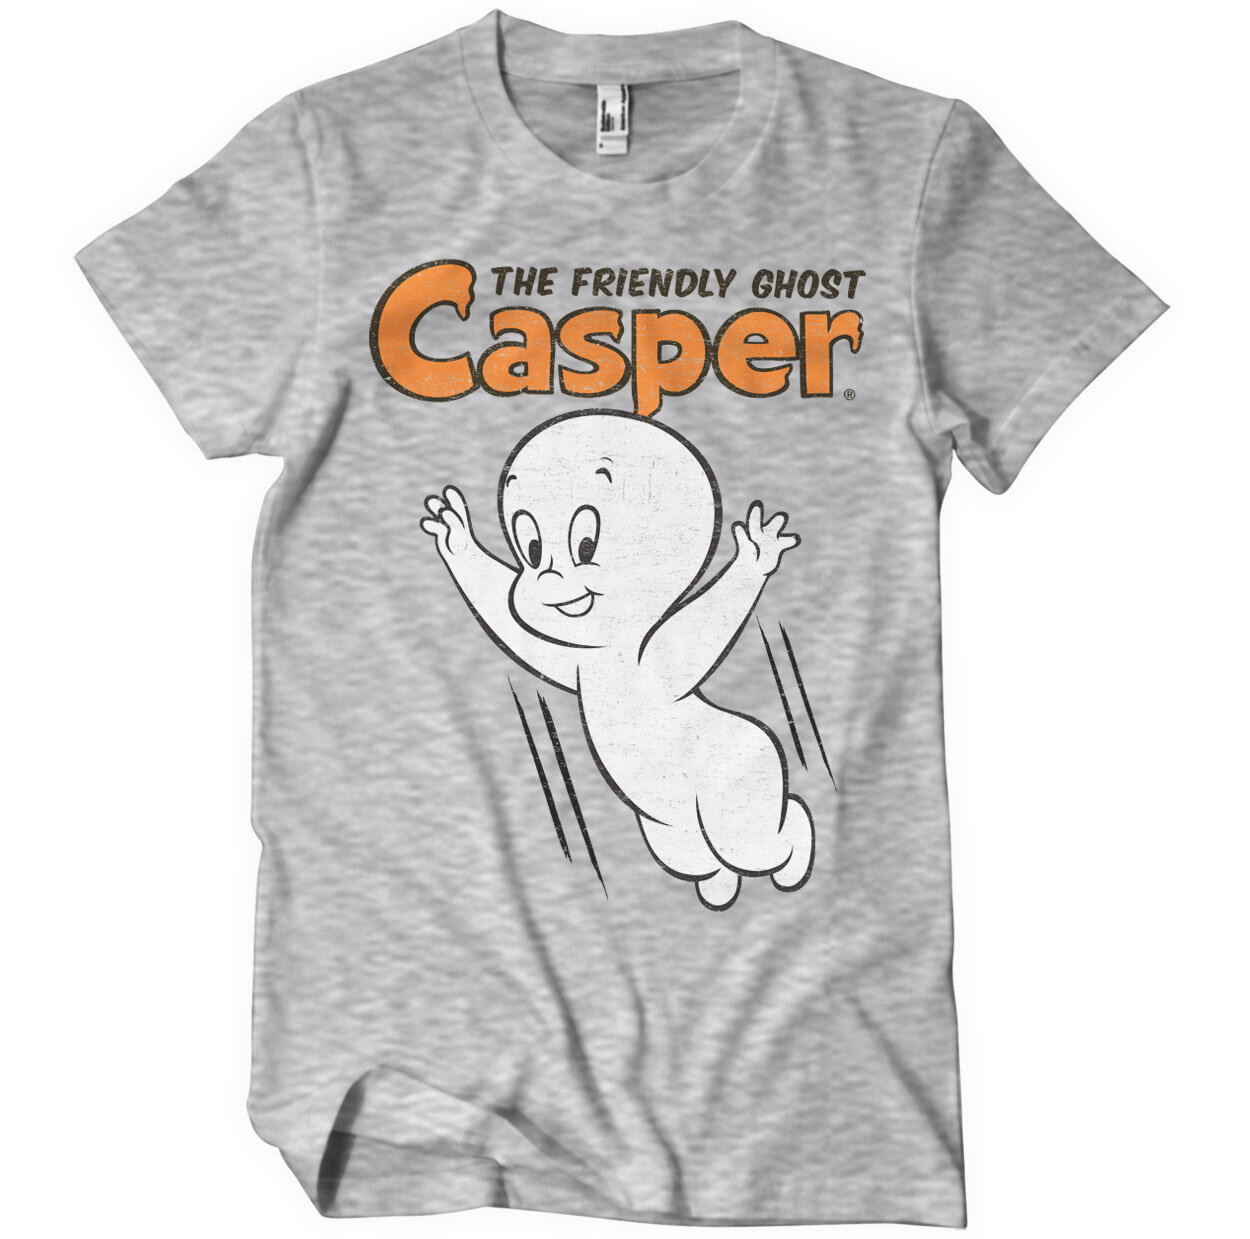 Casper - The Friendly Ghost T-Shirt